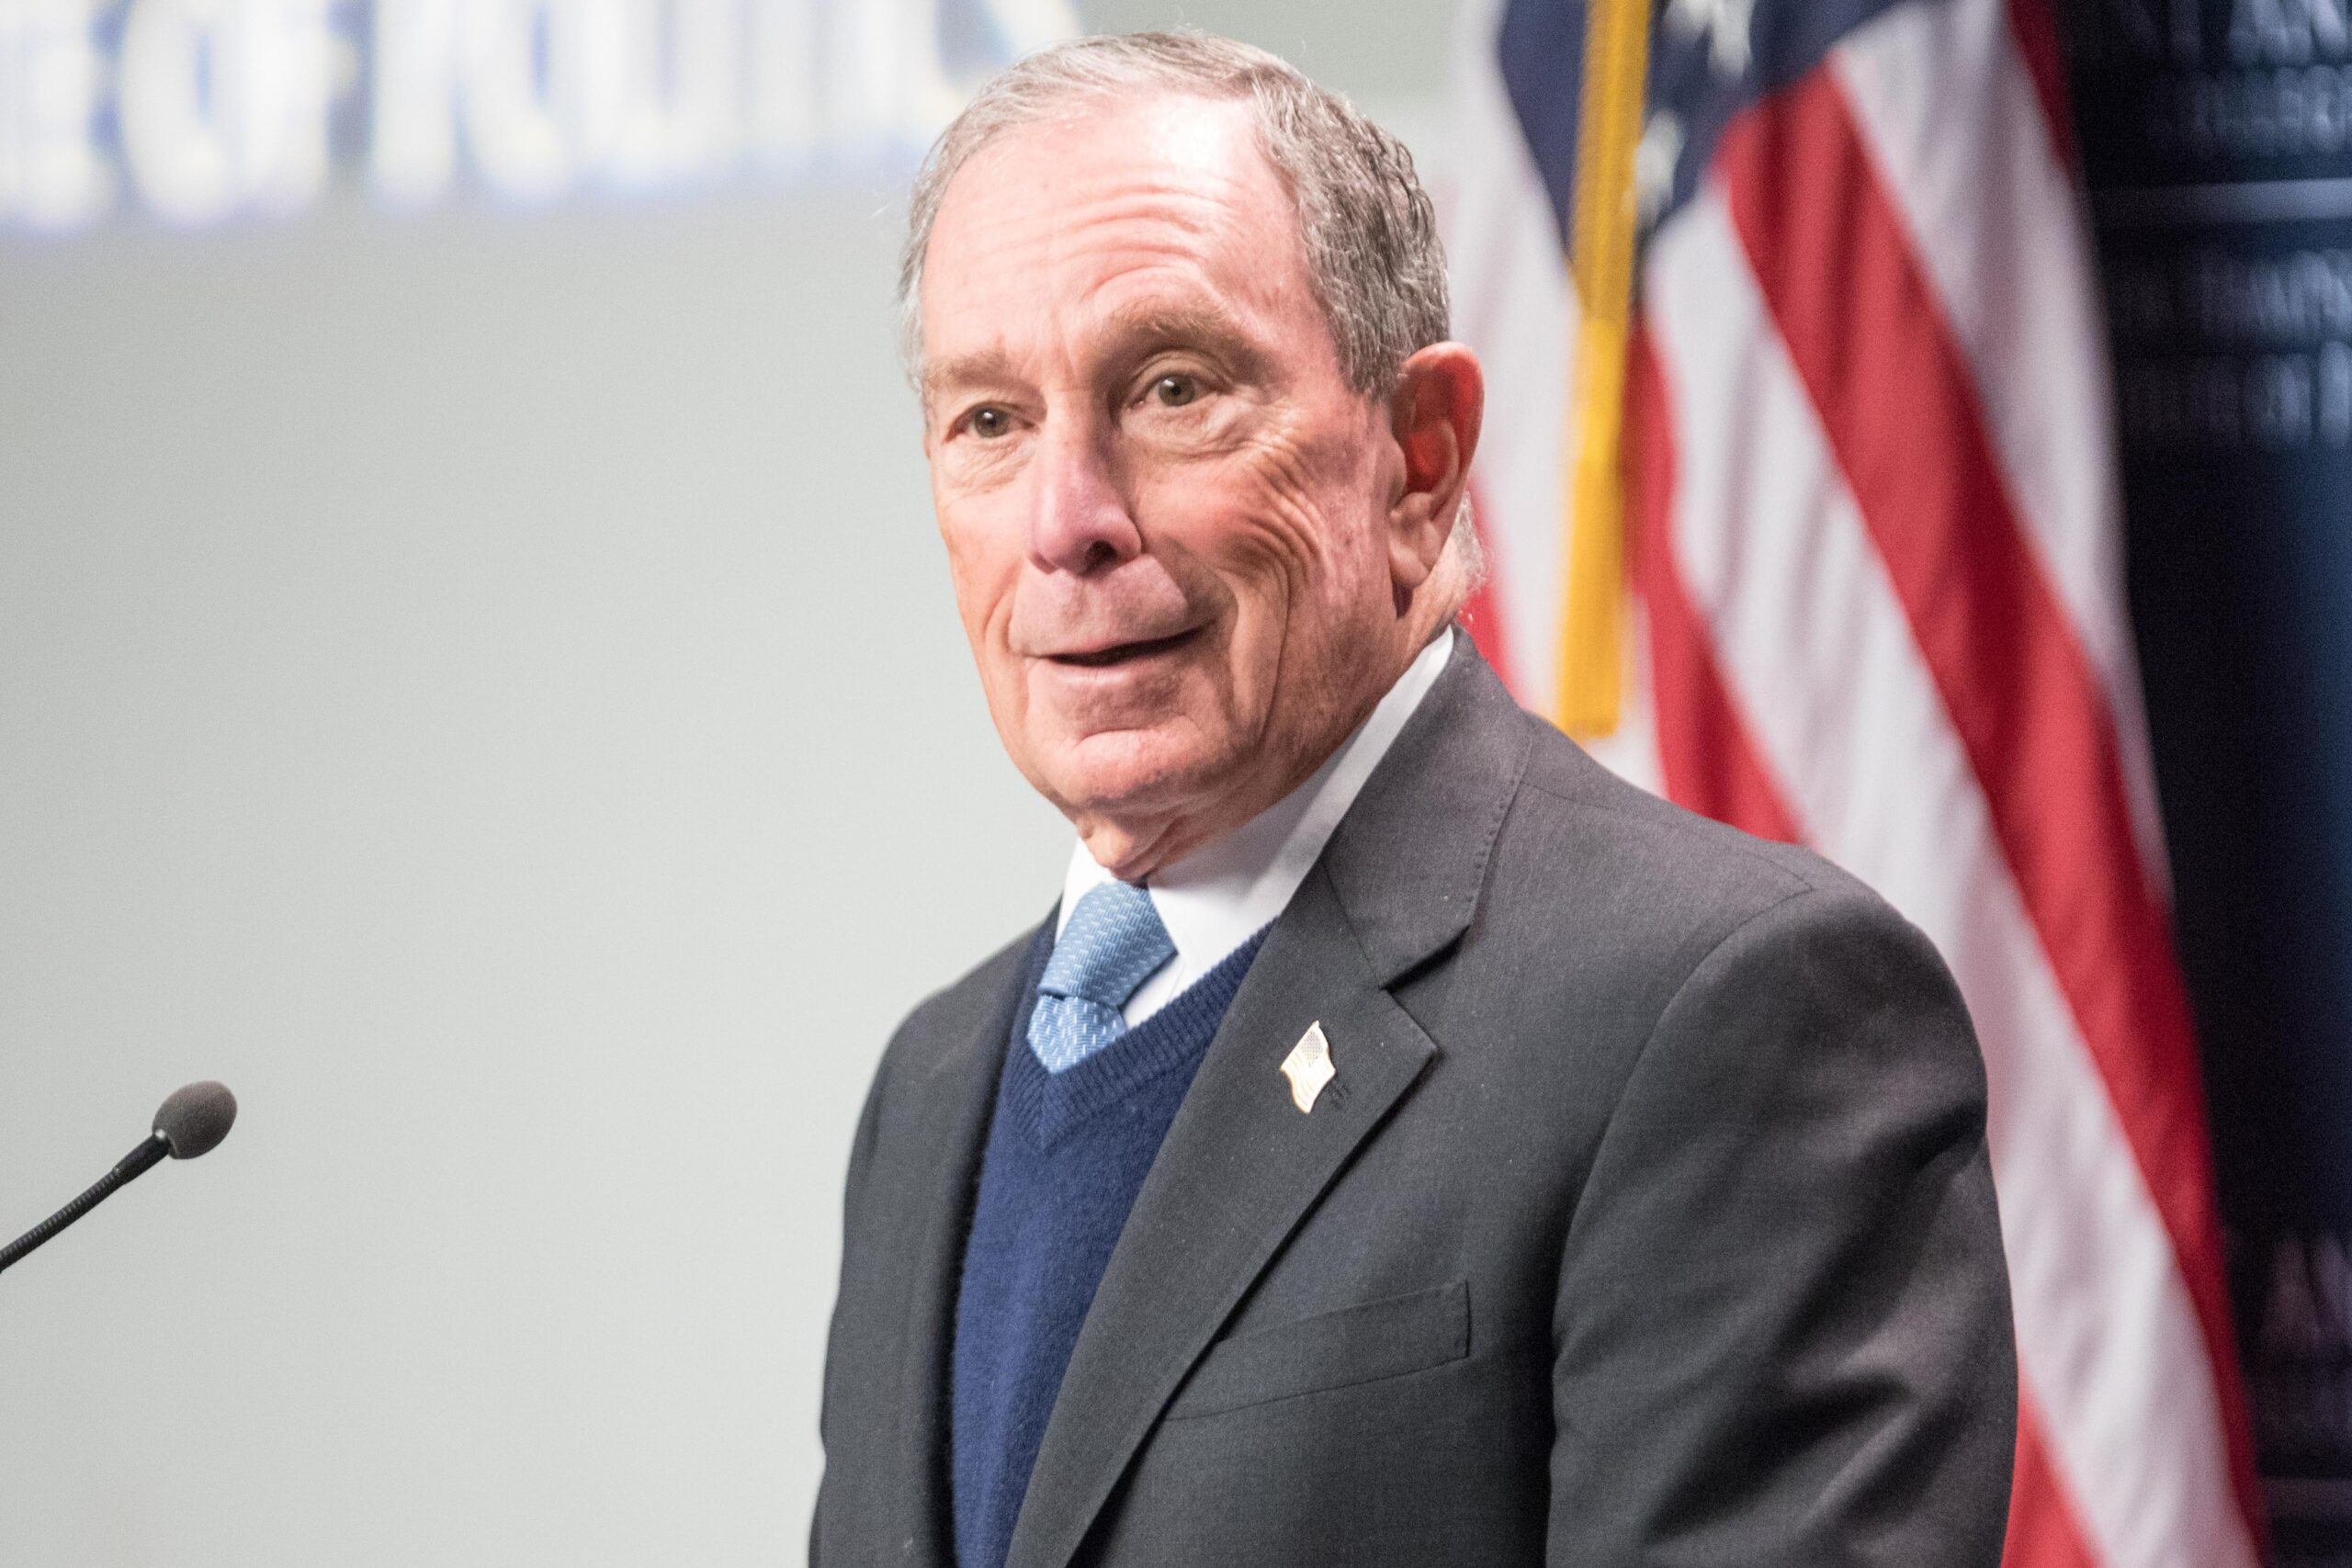 Michael Bloomberg Qualifies for the Next Democratic Debate